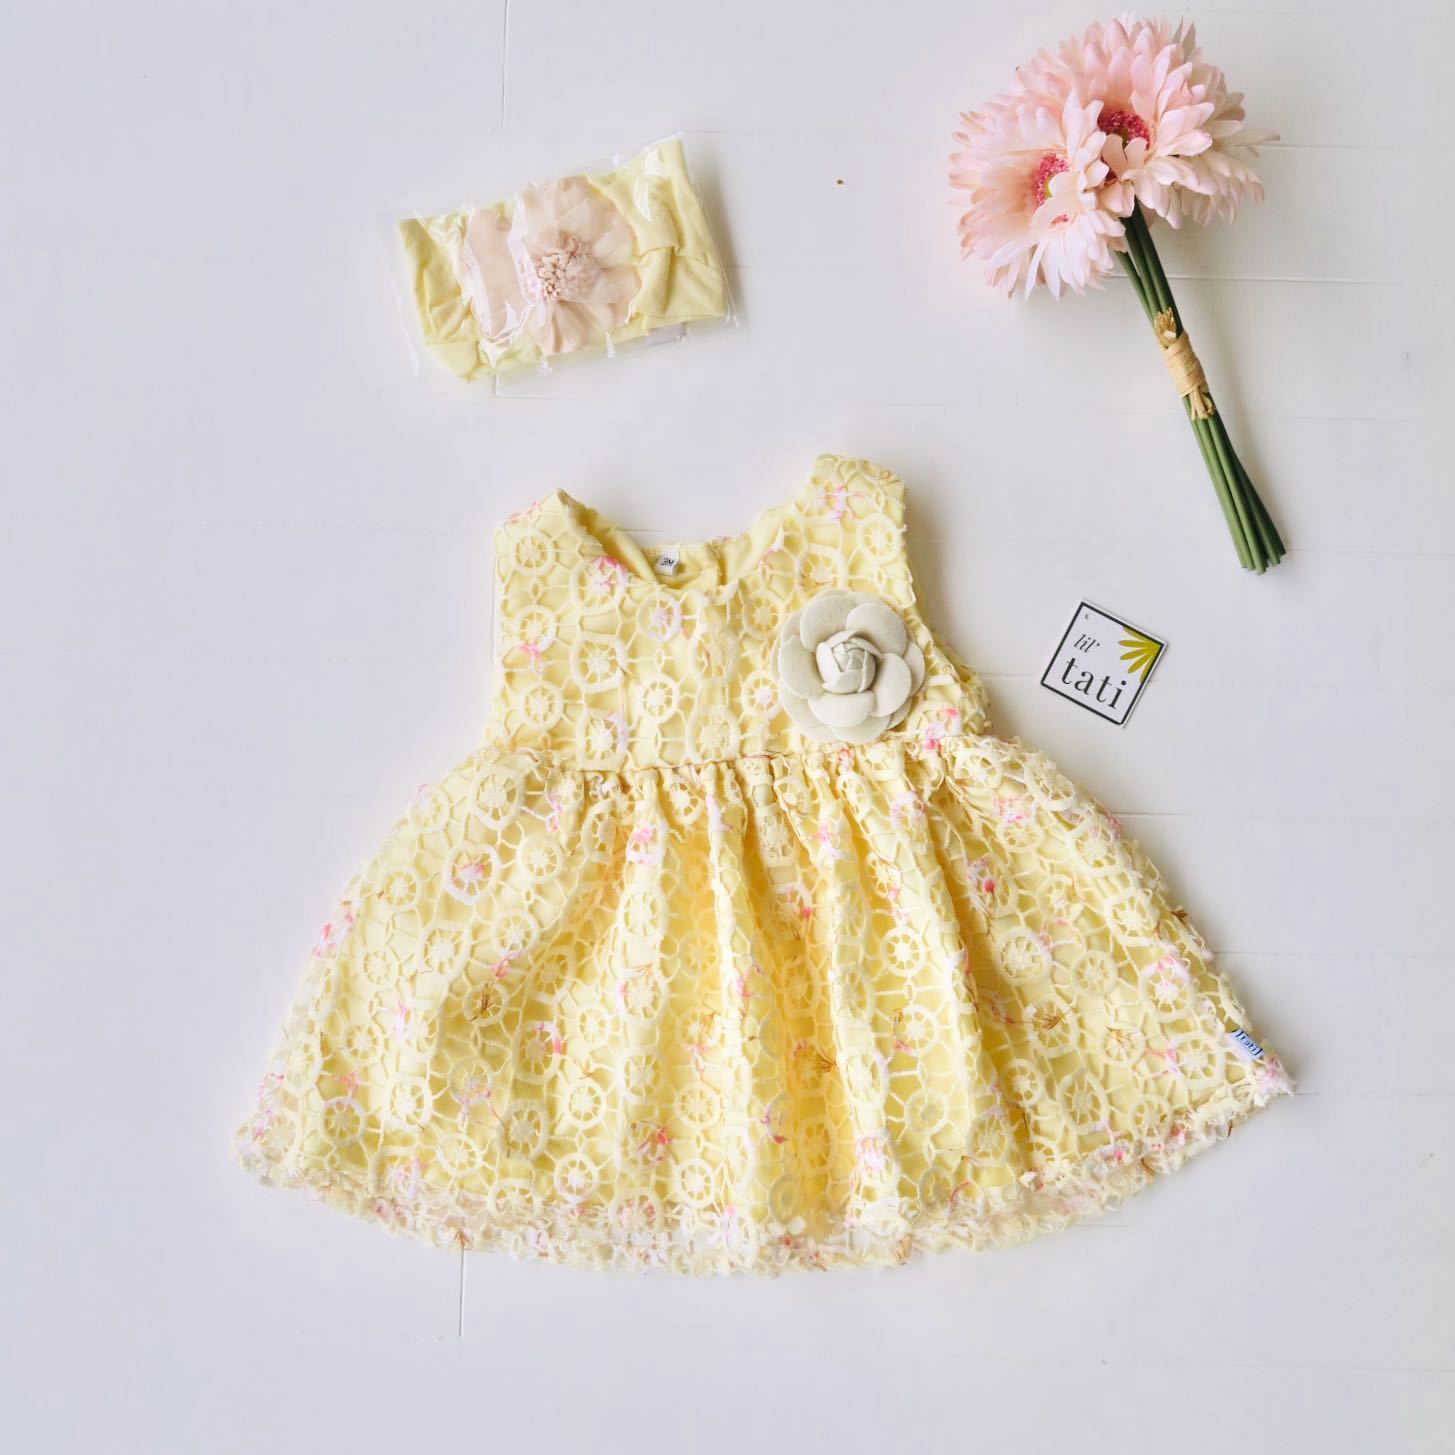 Iris Dress in Yellow Circlet Lace - Lil' Tati